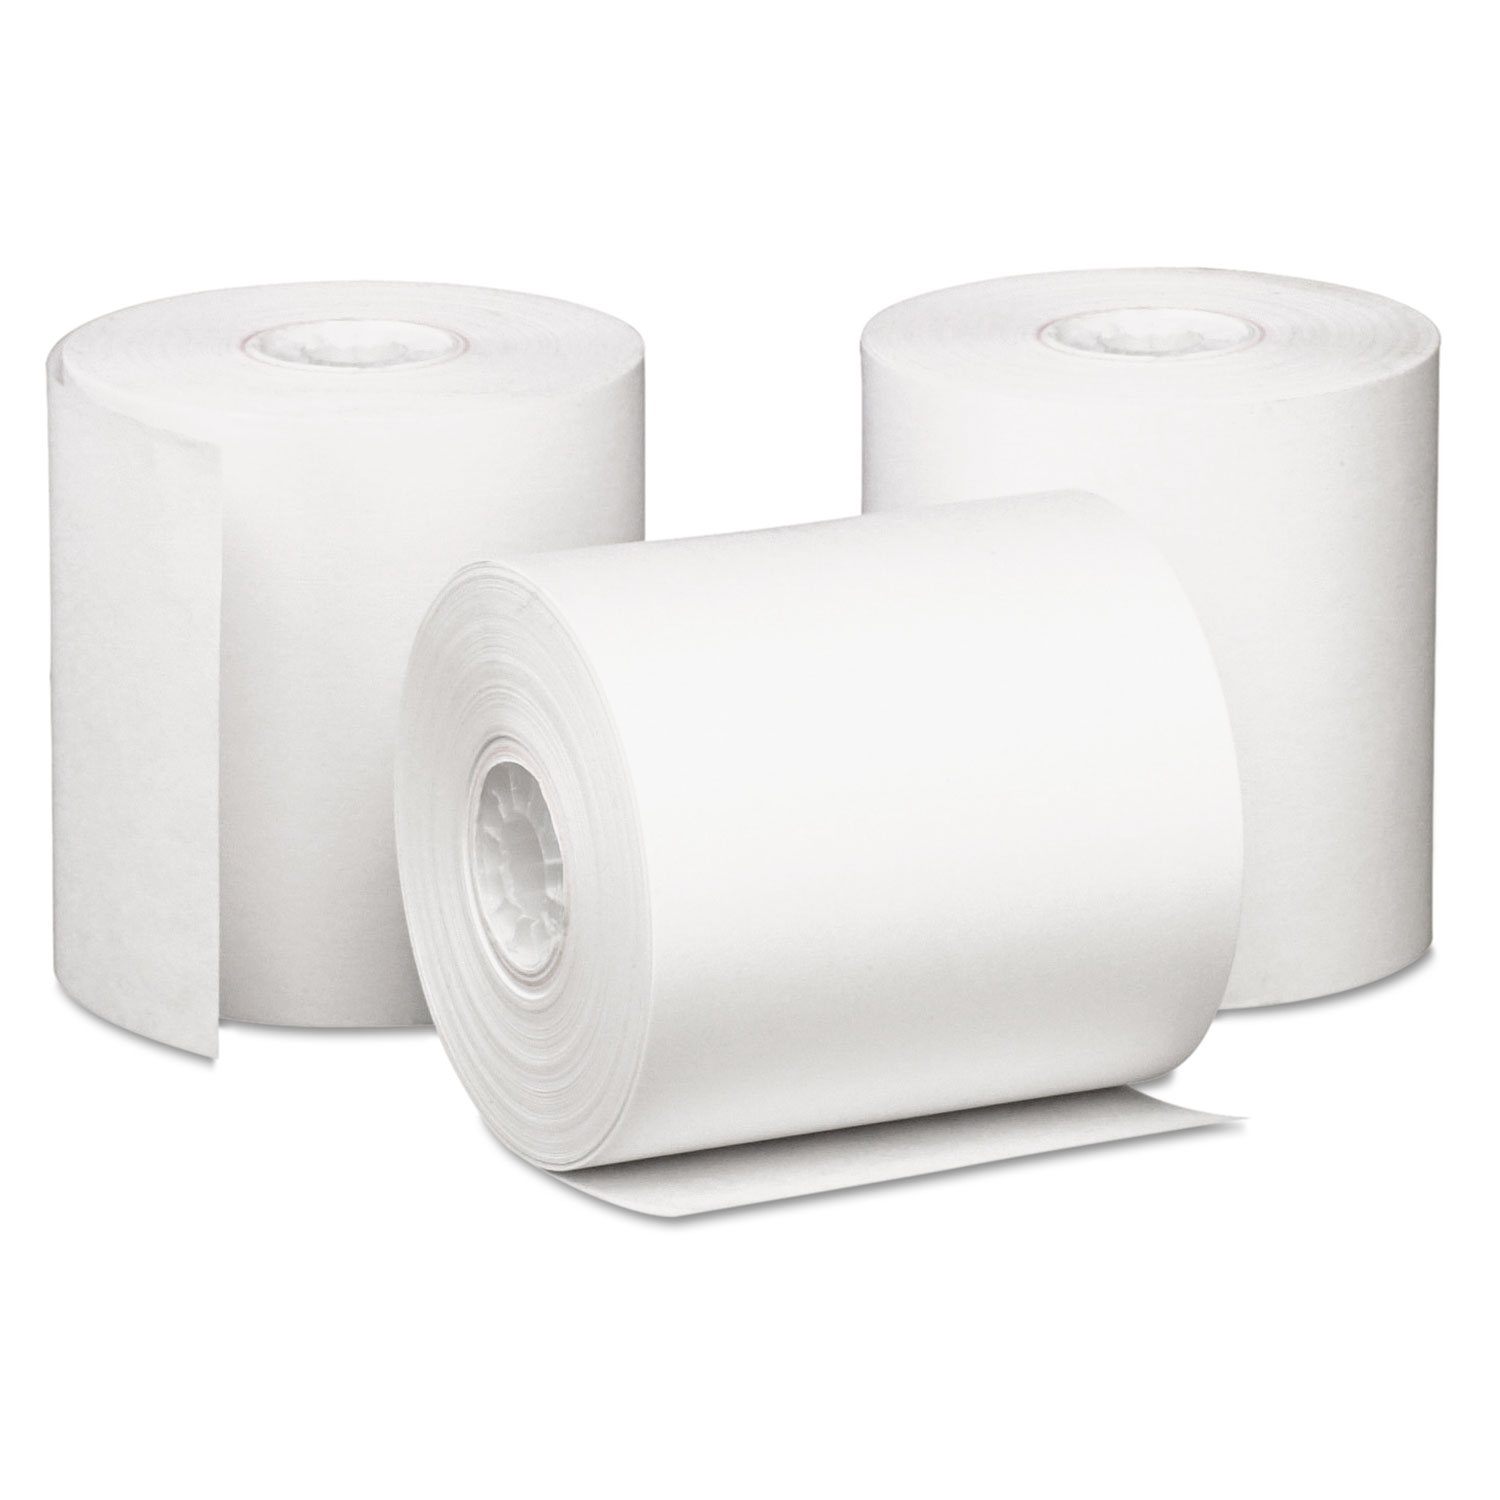  Iconex 09228 Impact Bond Paper Rolls, 3 x 85 ft, White, 50/Carton (ICX90742203) 